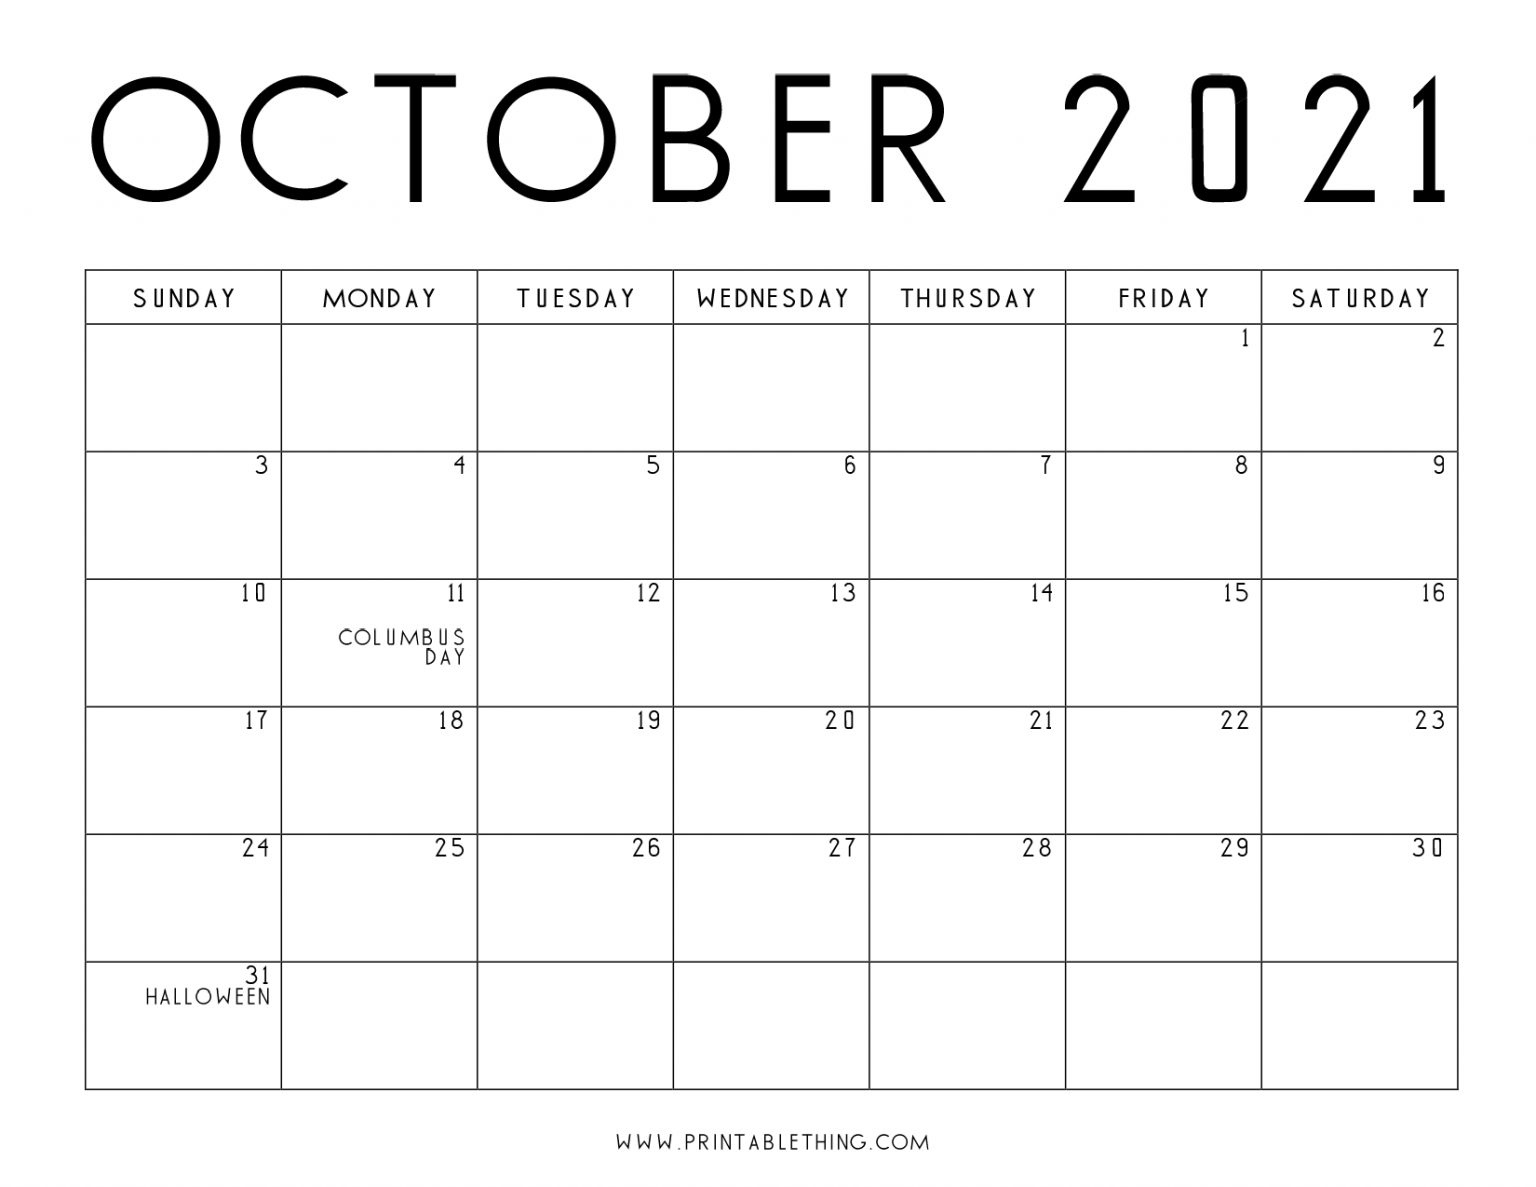 October 2021 Calendar Pdf, October 2021 Calendar Image Free Show November 2021 Calendar